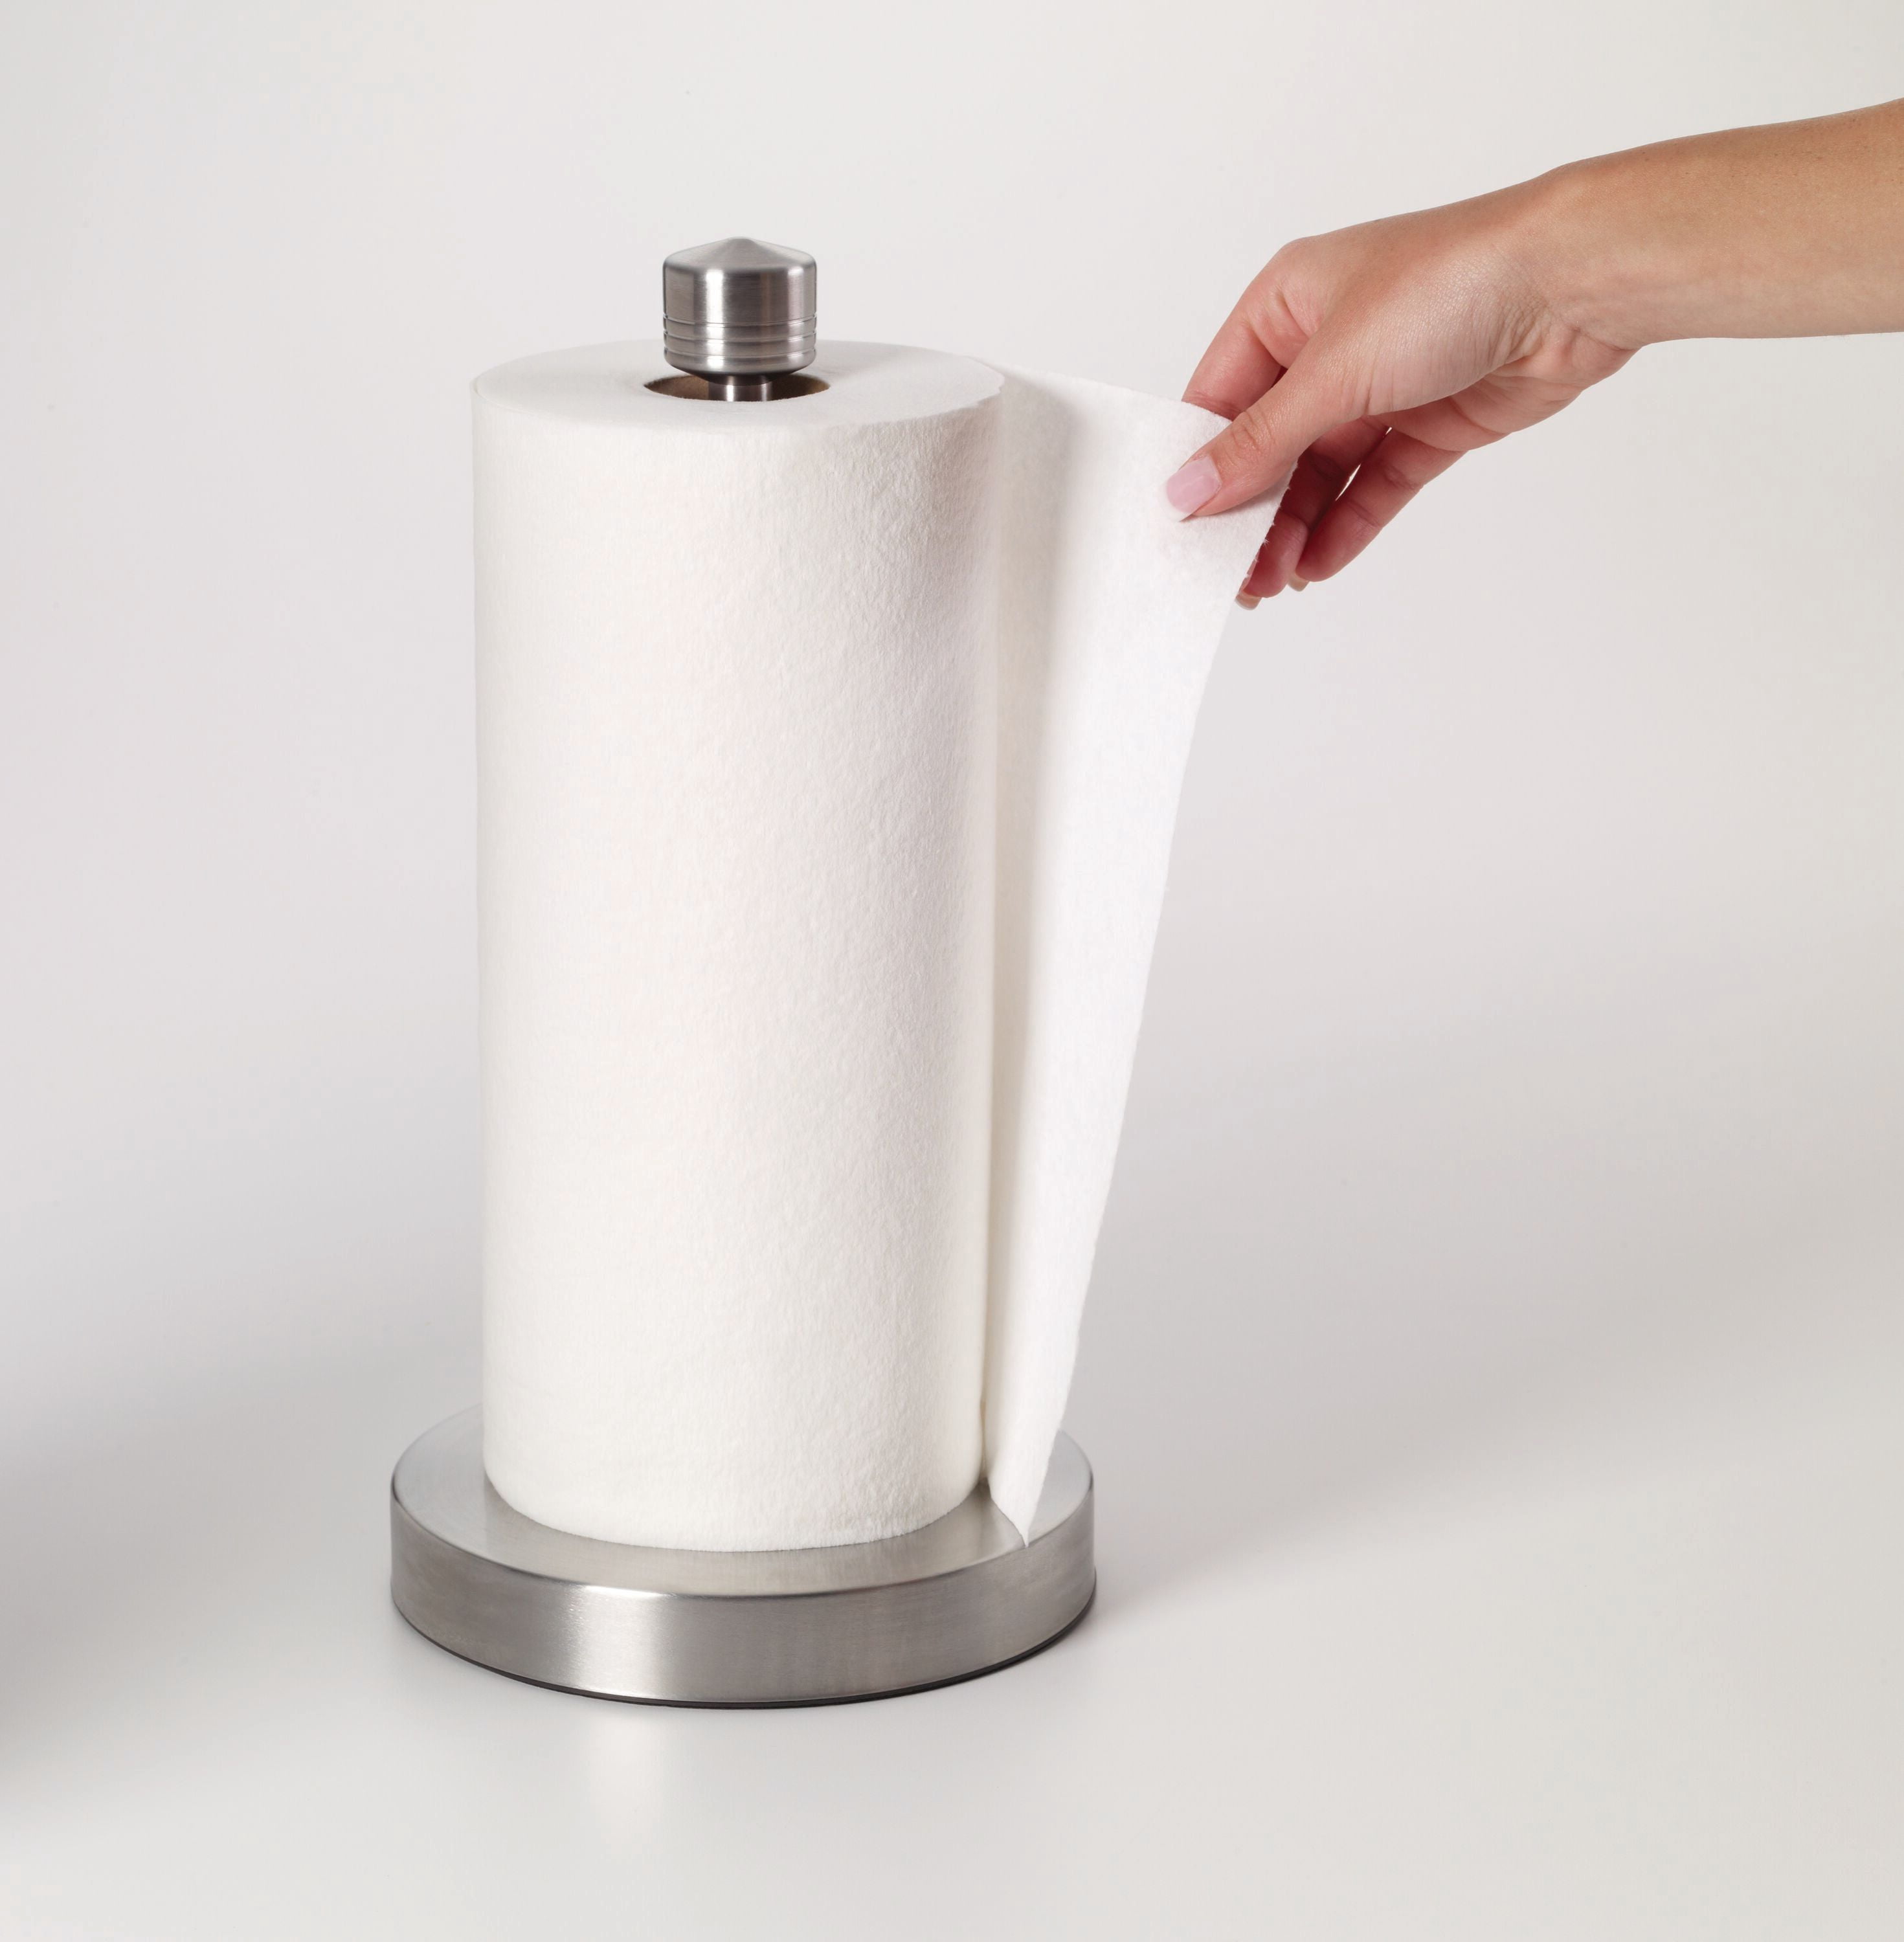 Ratcheting Paper Towel Holder Install 